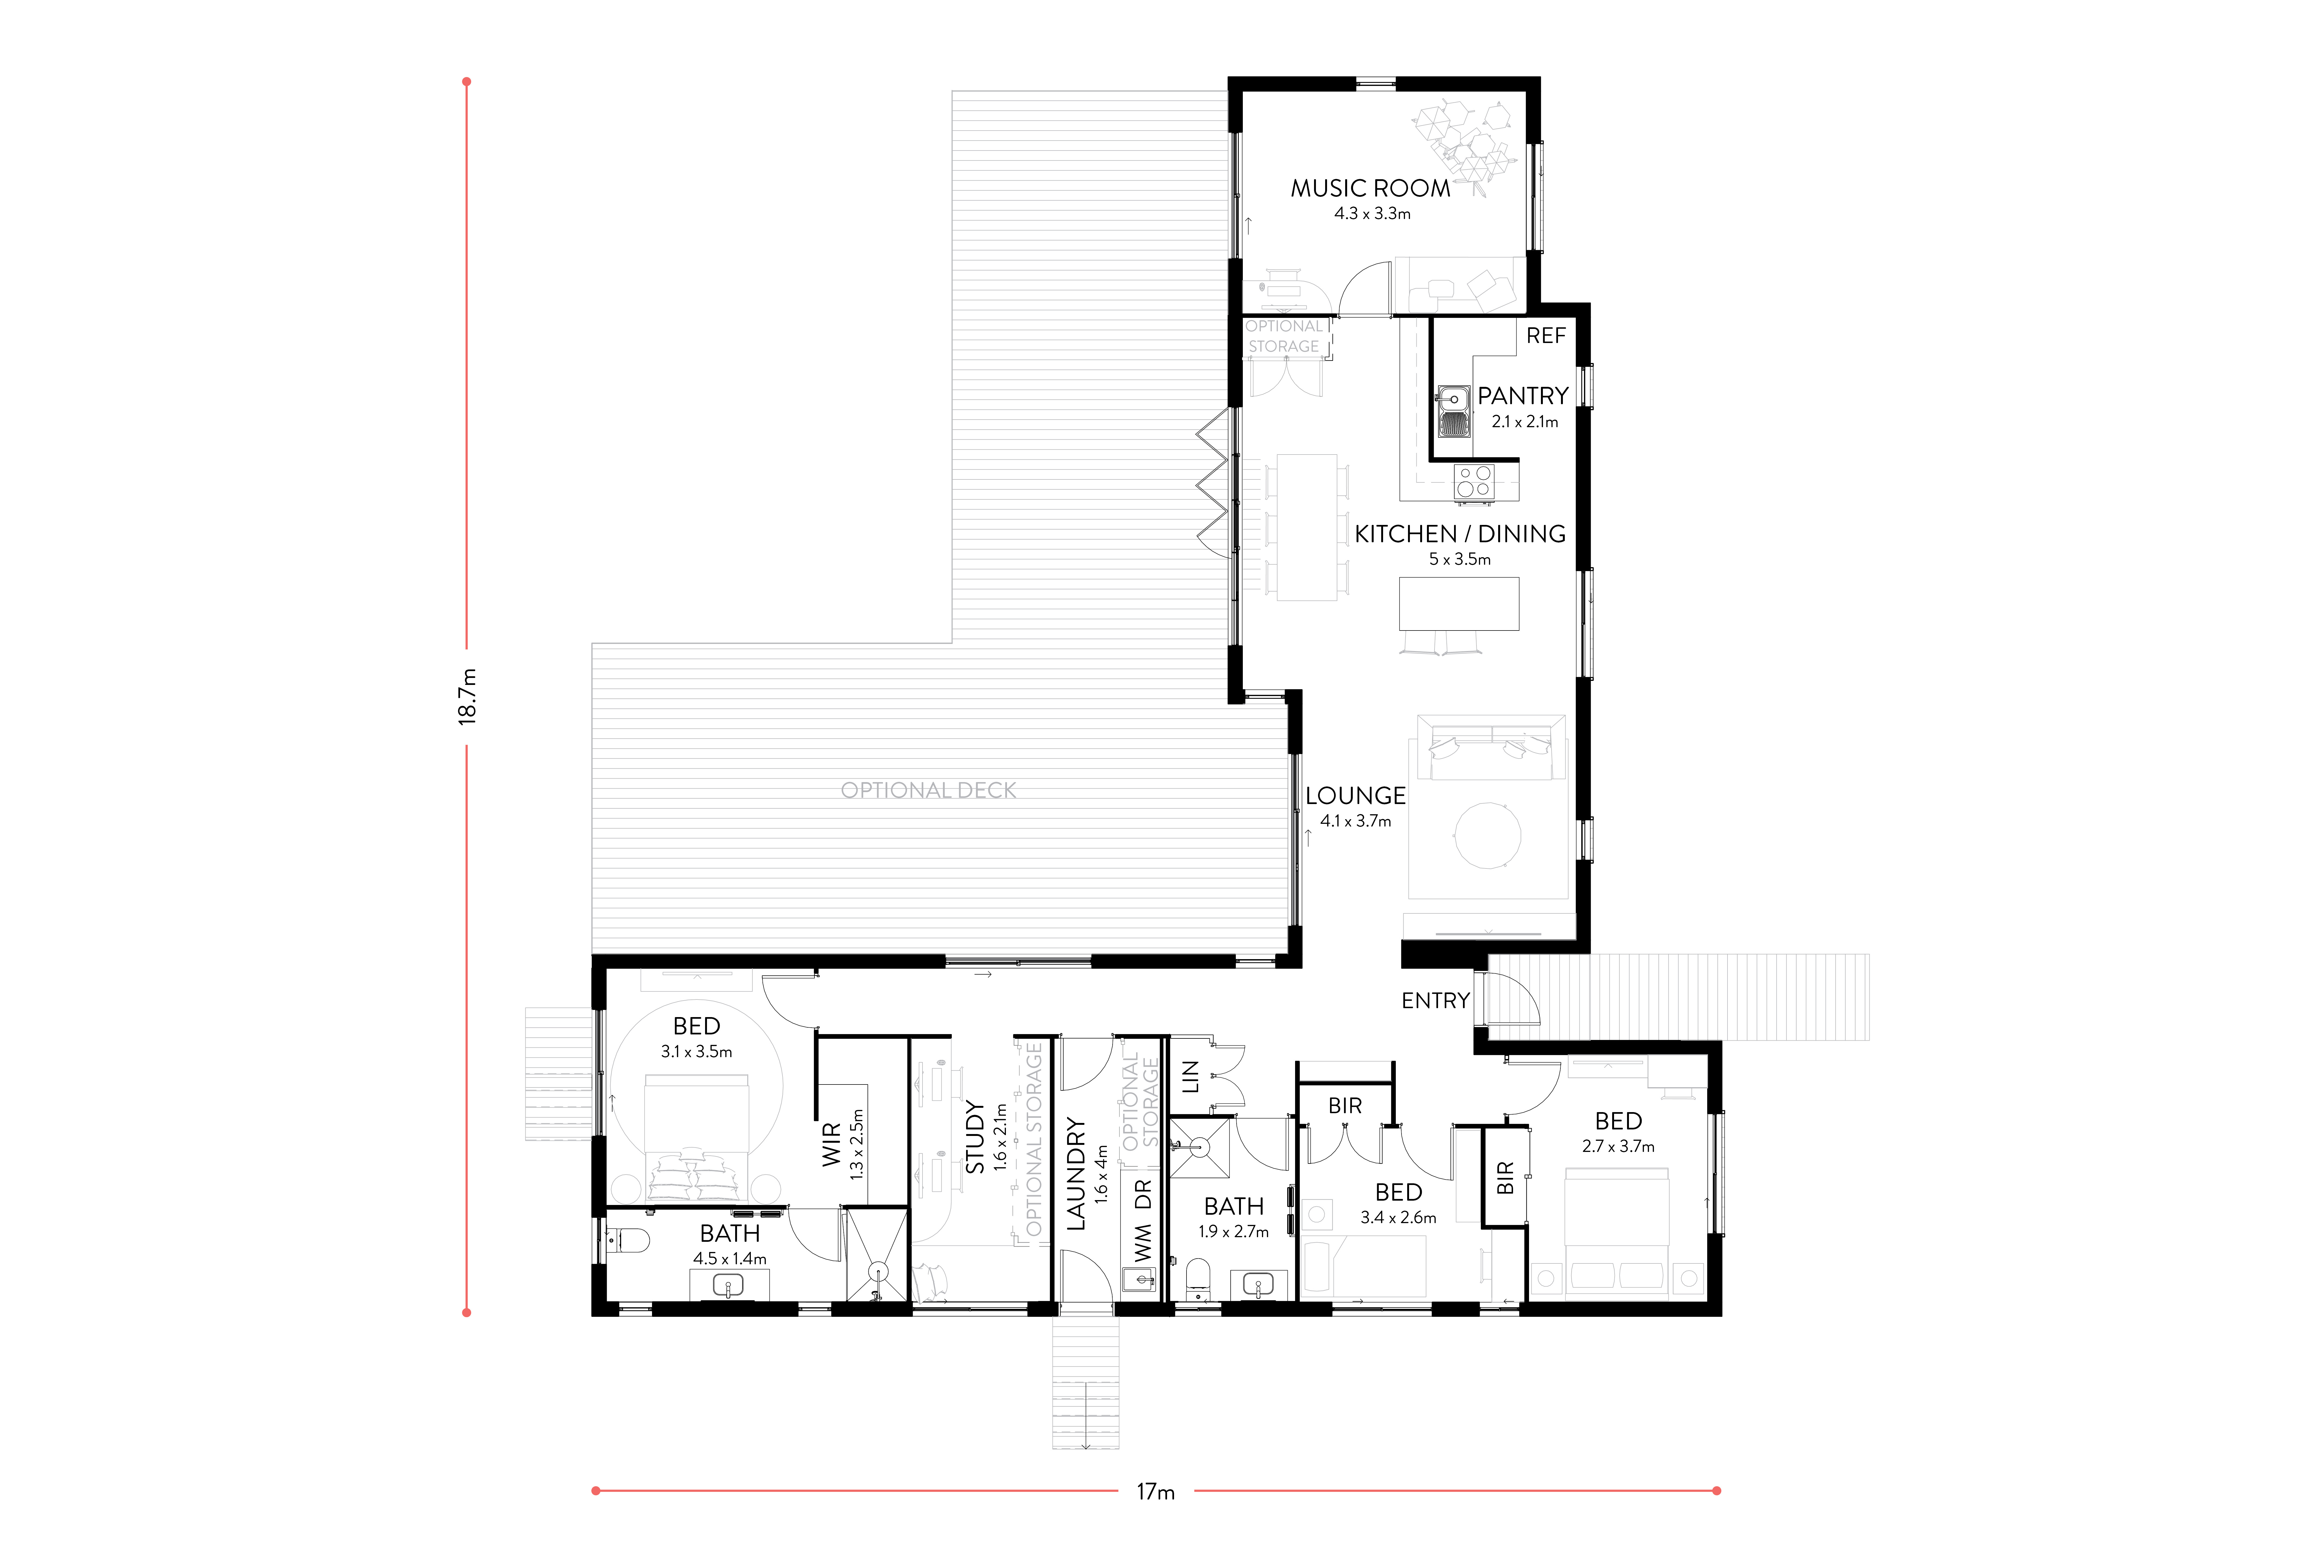 Floorplan of PLACEit modular home - Willow